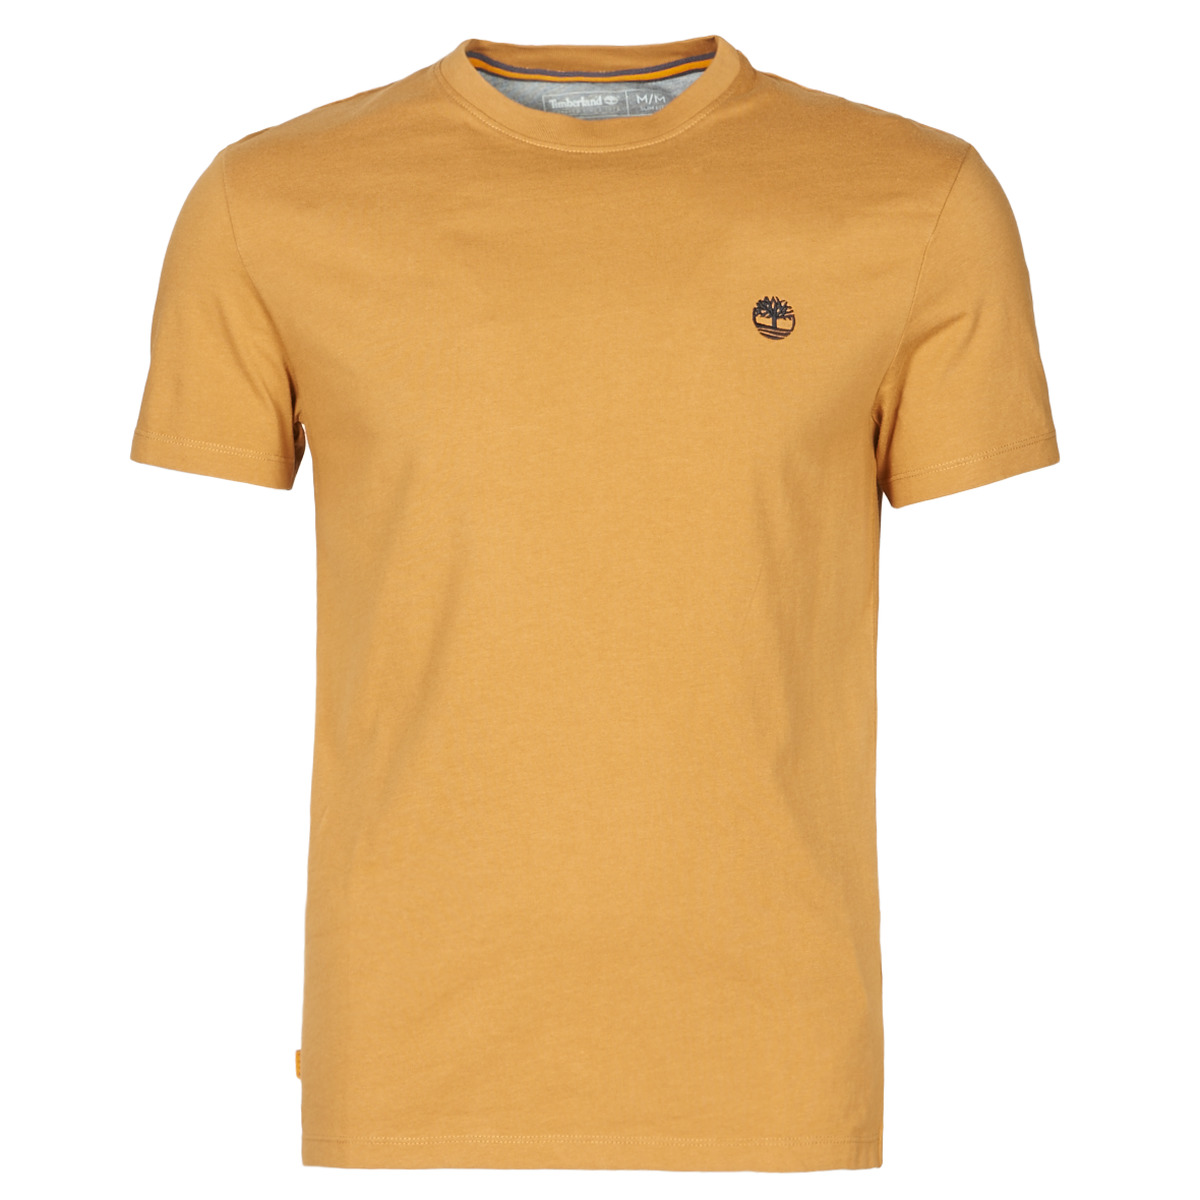 Vêtements Homme T-shirts manches courtes Timberland SS DUNSTAN RIVER POCKET TEE SLIM 